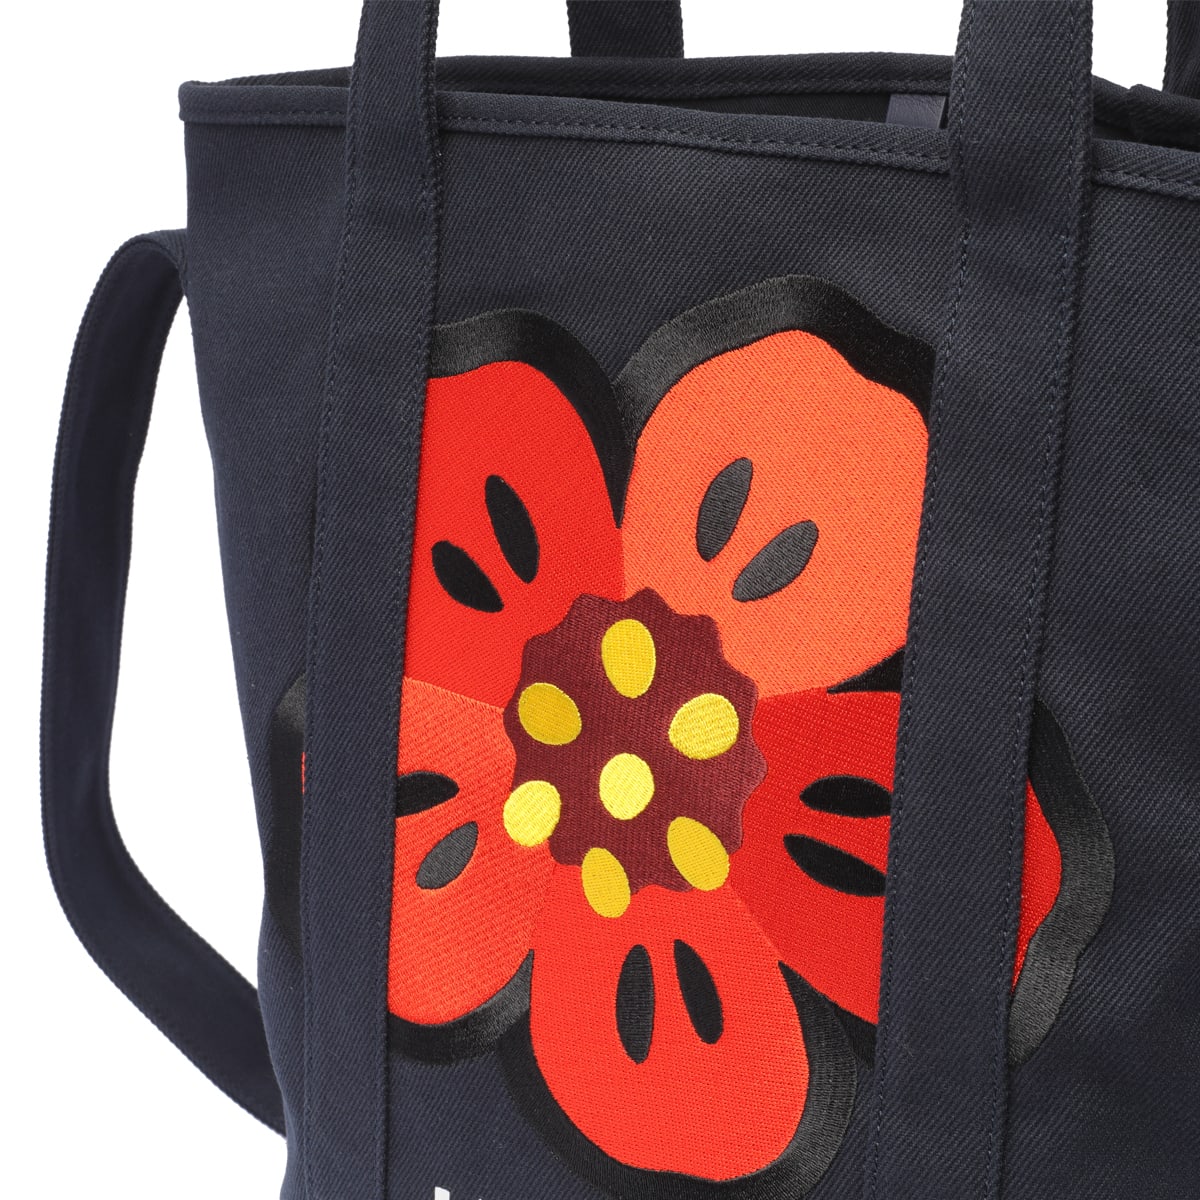 Shop Kenzo Boke Flower Tote Bag In Blu